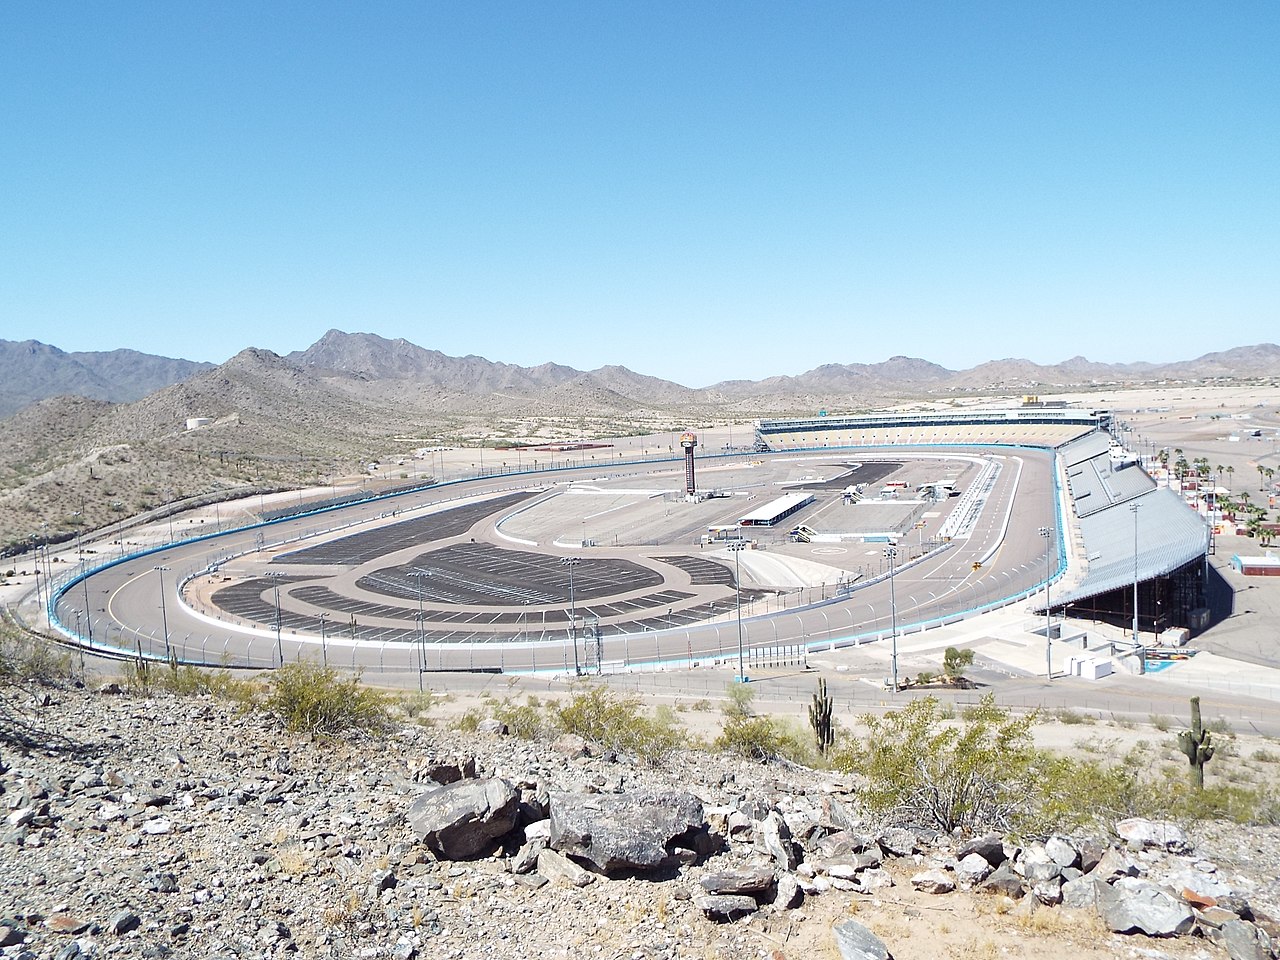 Phoenix Internatinal Raceway | Avondale AZ | Wikipedia.org